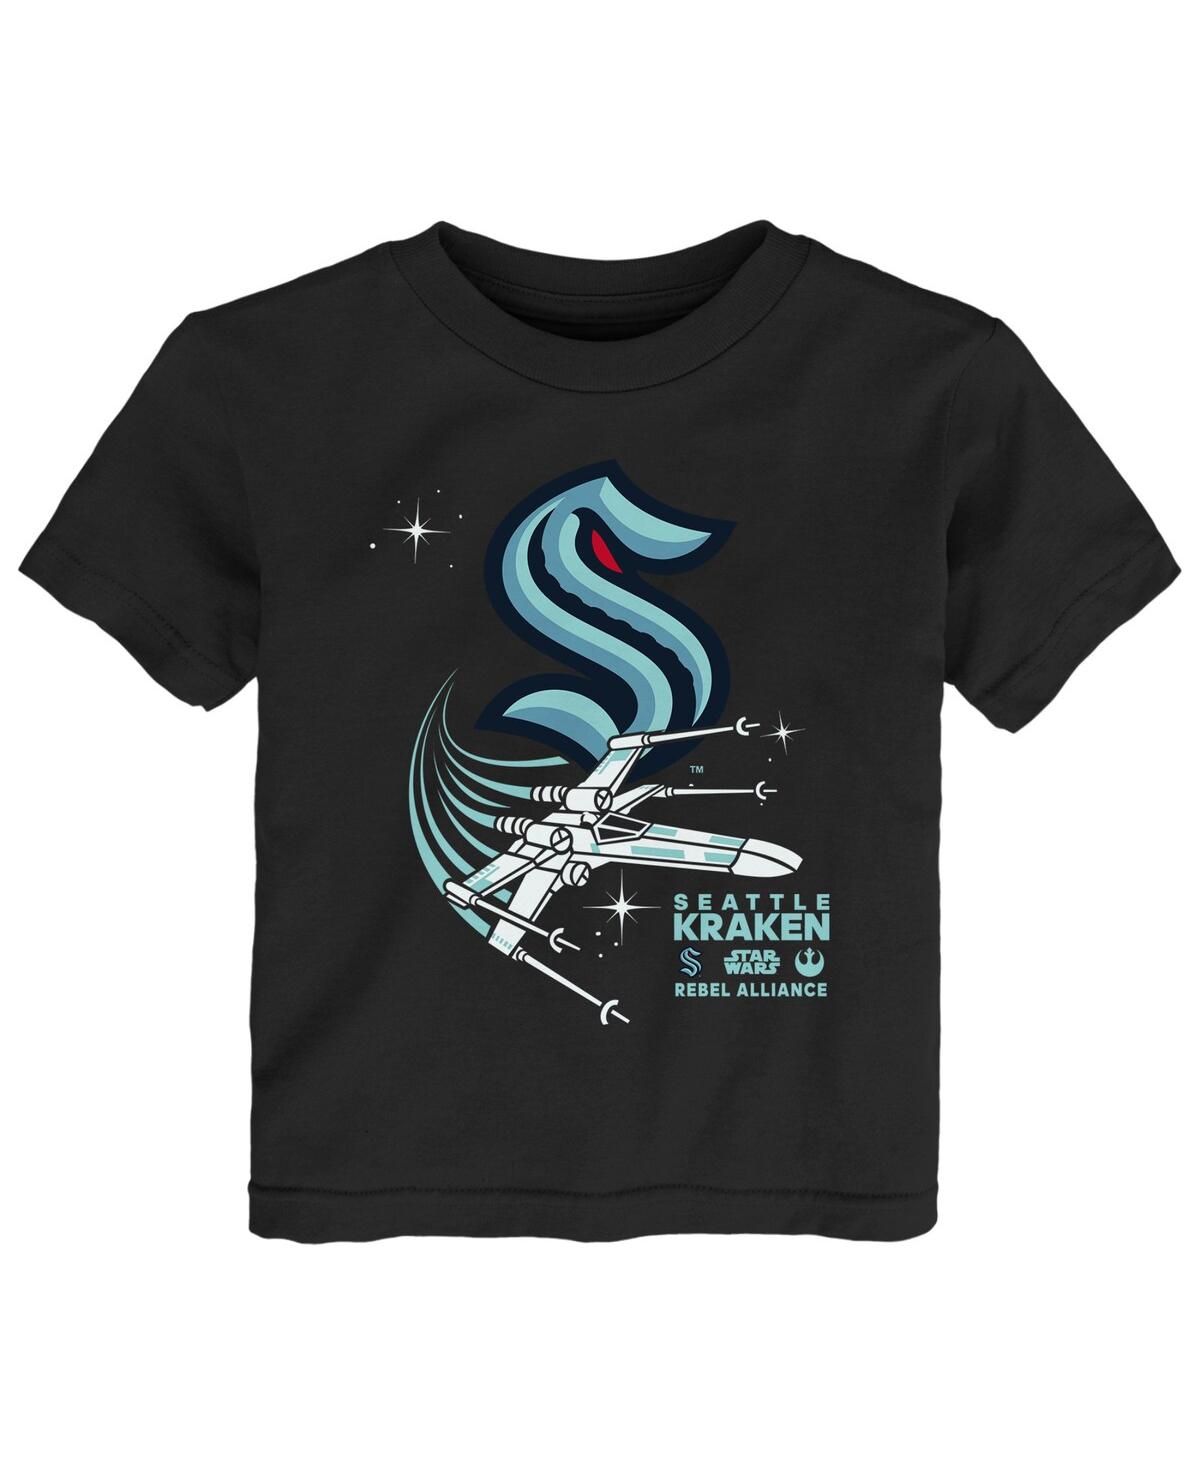 Outerstuff Babies' Toddler Black Seattle Kraken Star Wars Rebel Alliance T-shirt